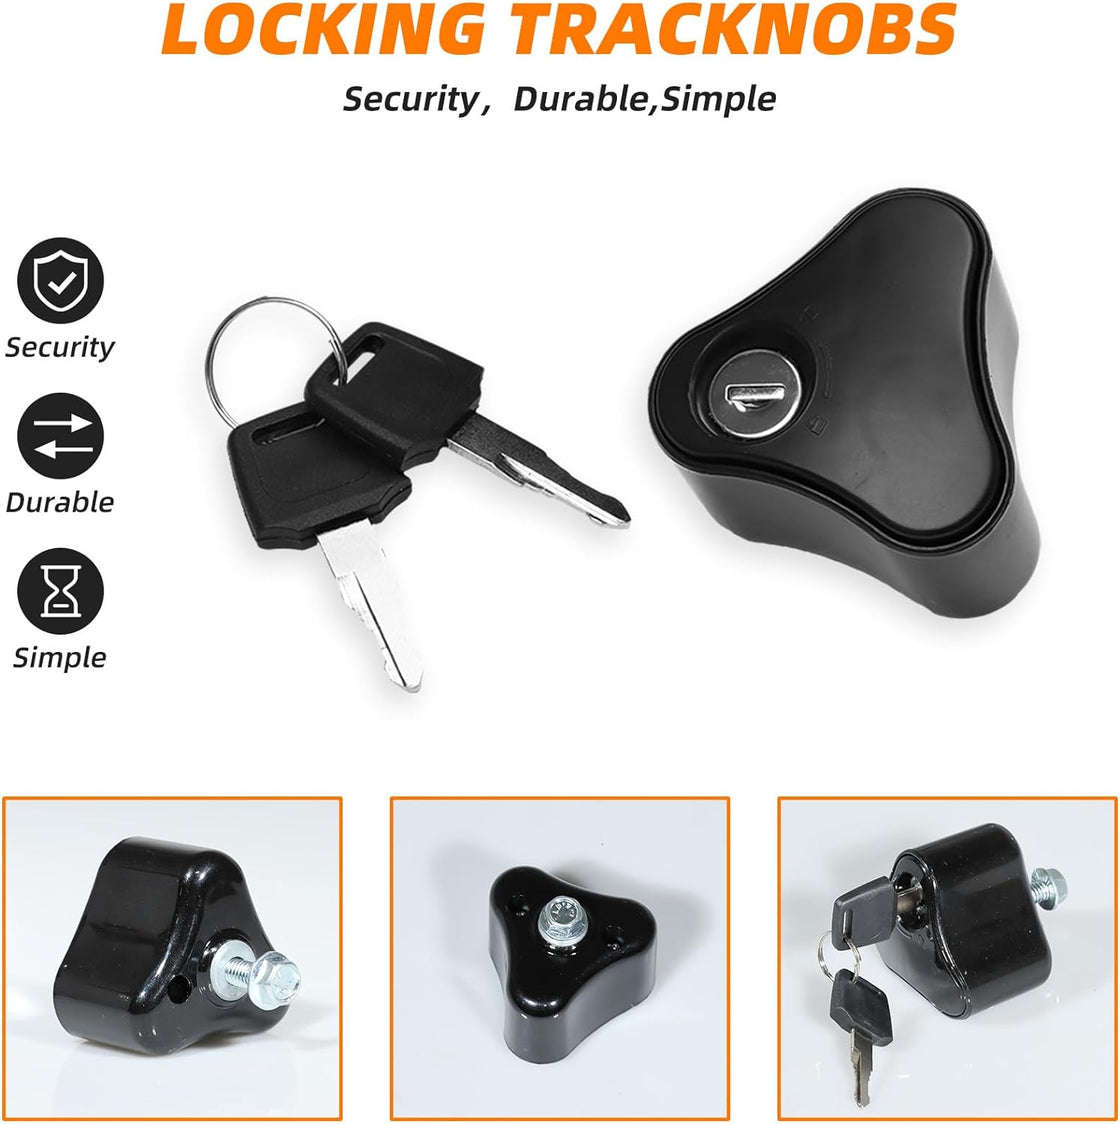 MELIPRON Lockable Knob with Lock Rear Mounted Bike Rack Knob Lock-6